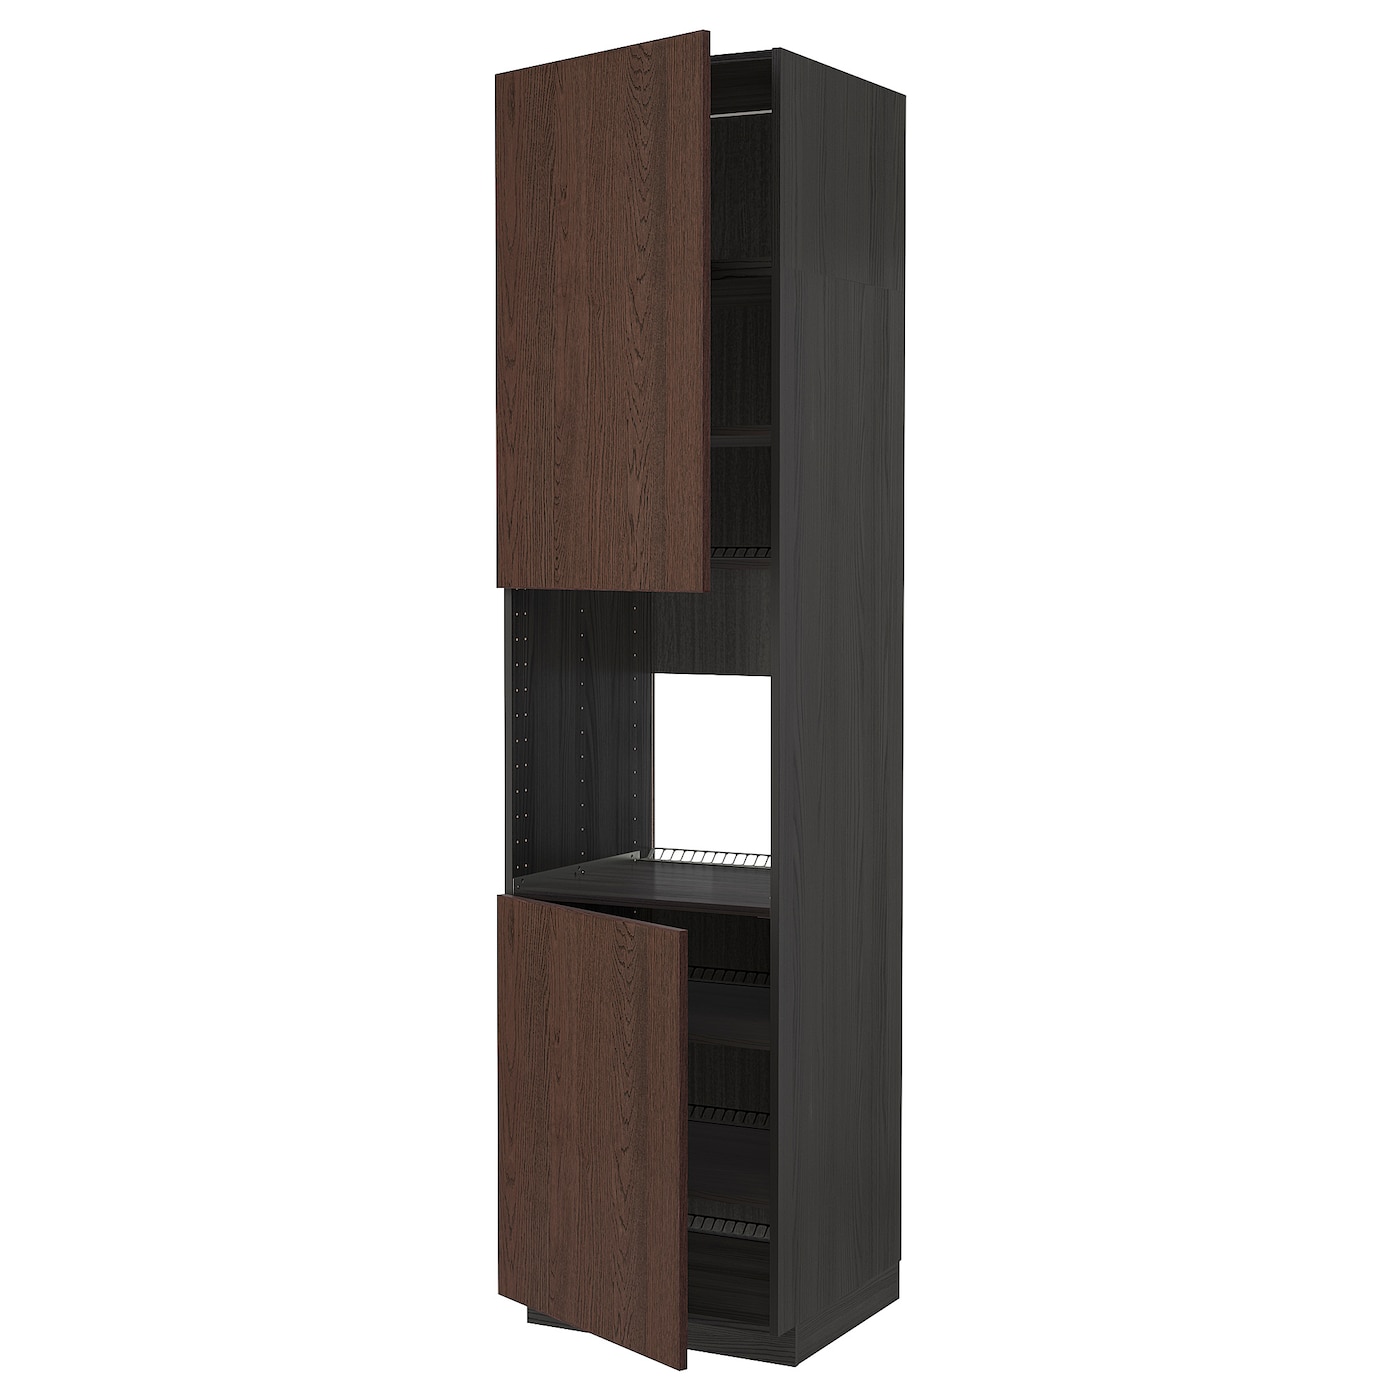 Кухонный шкаф-пенал - IKEA METOD/МЕТОД ИКЕА, 240х60х60 см, черный/коричневый